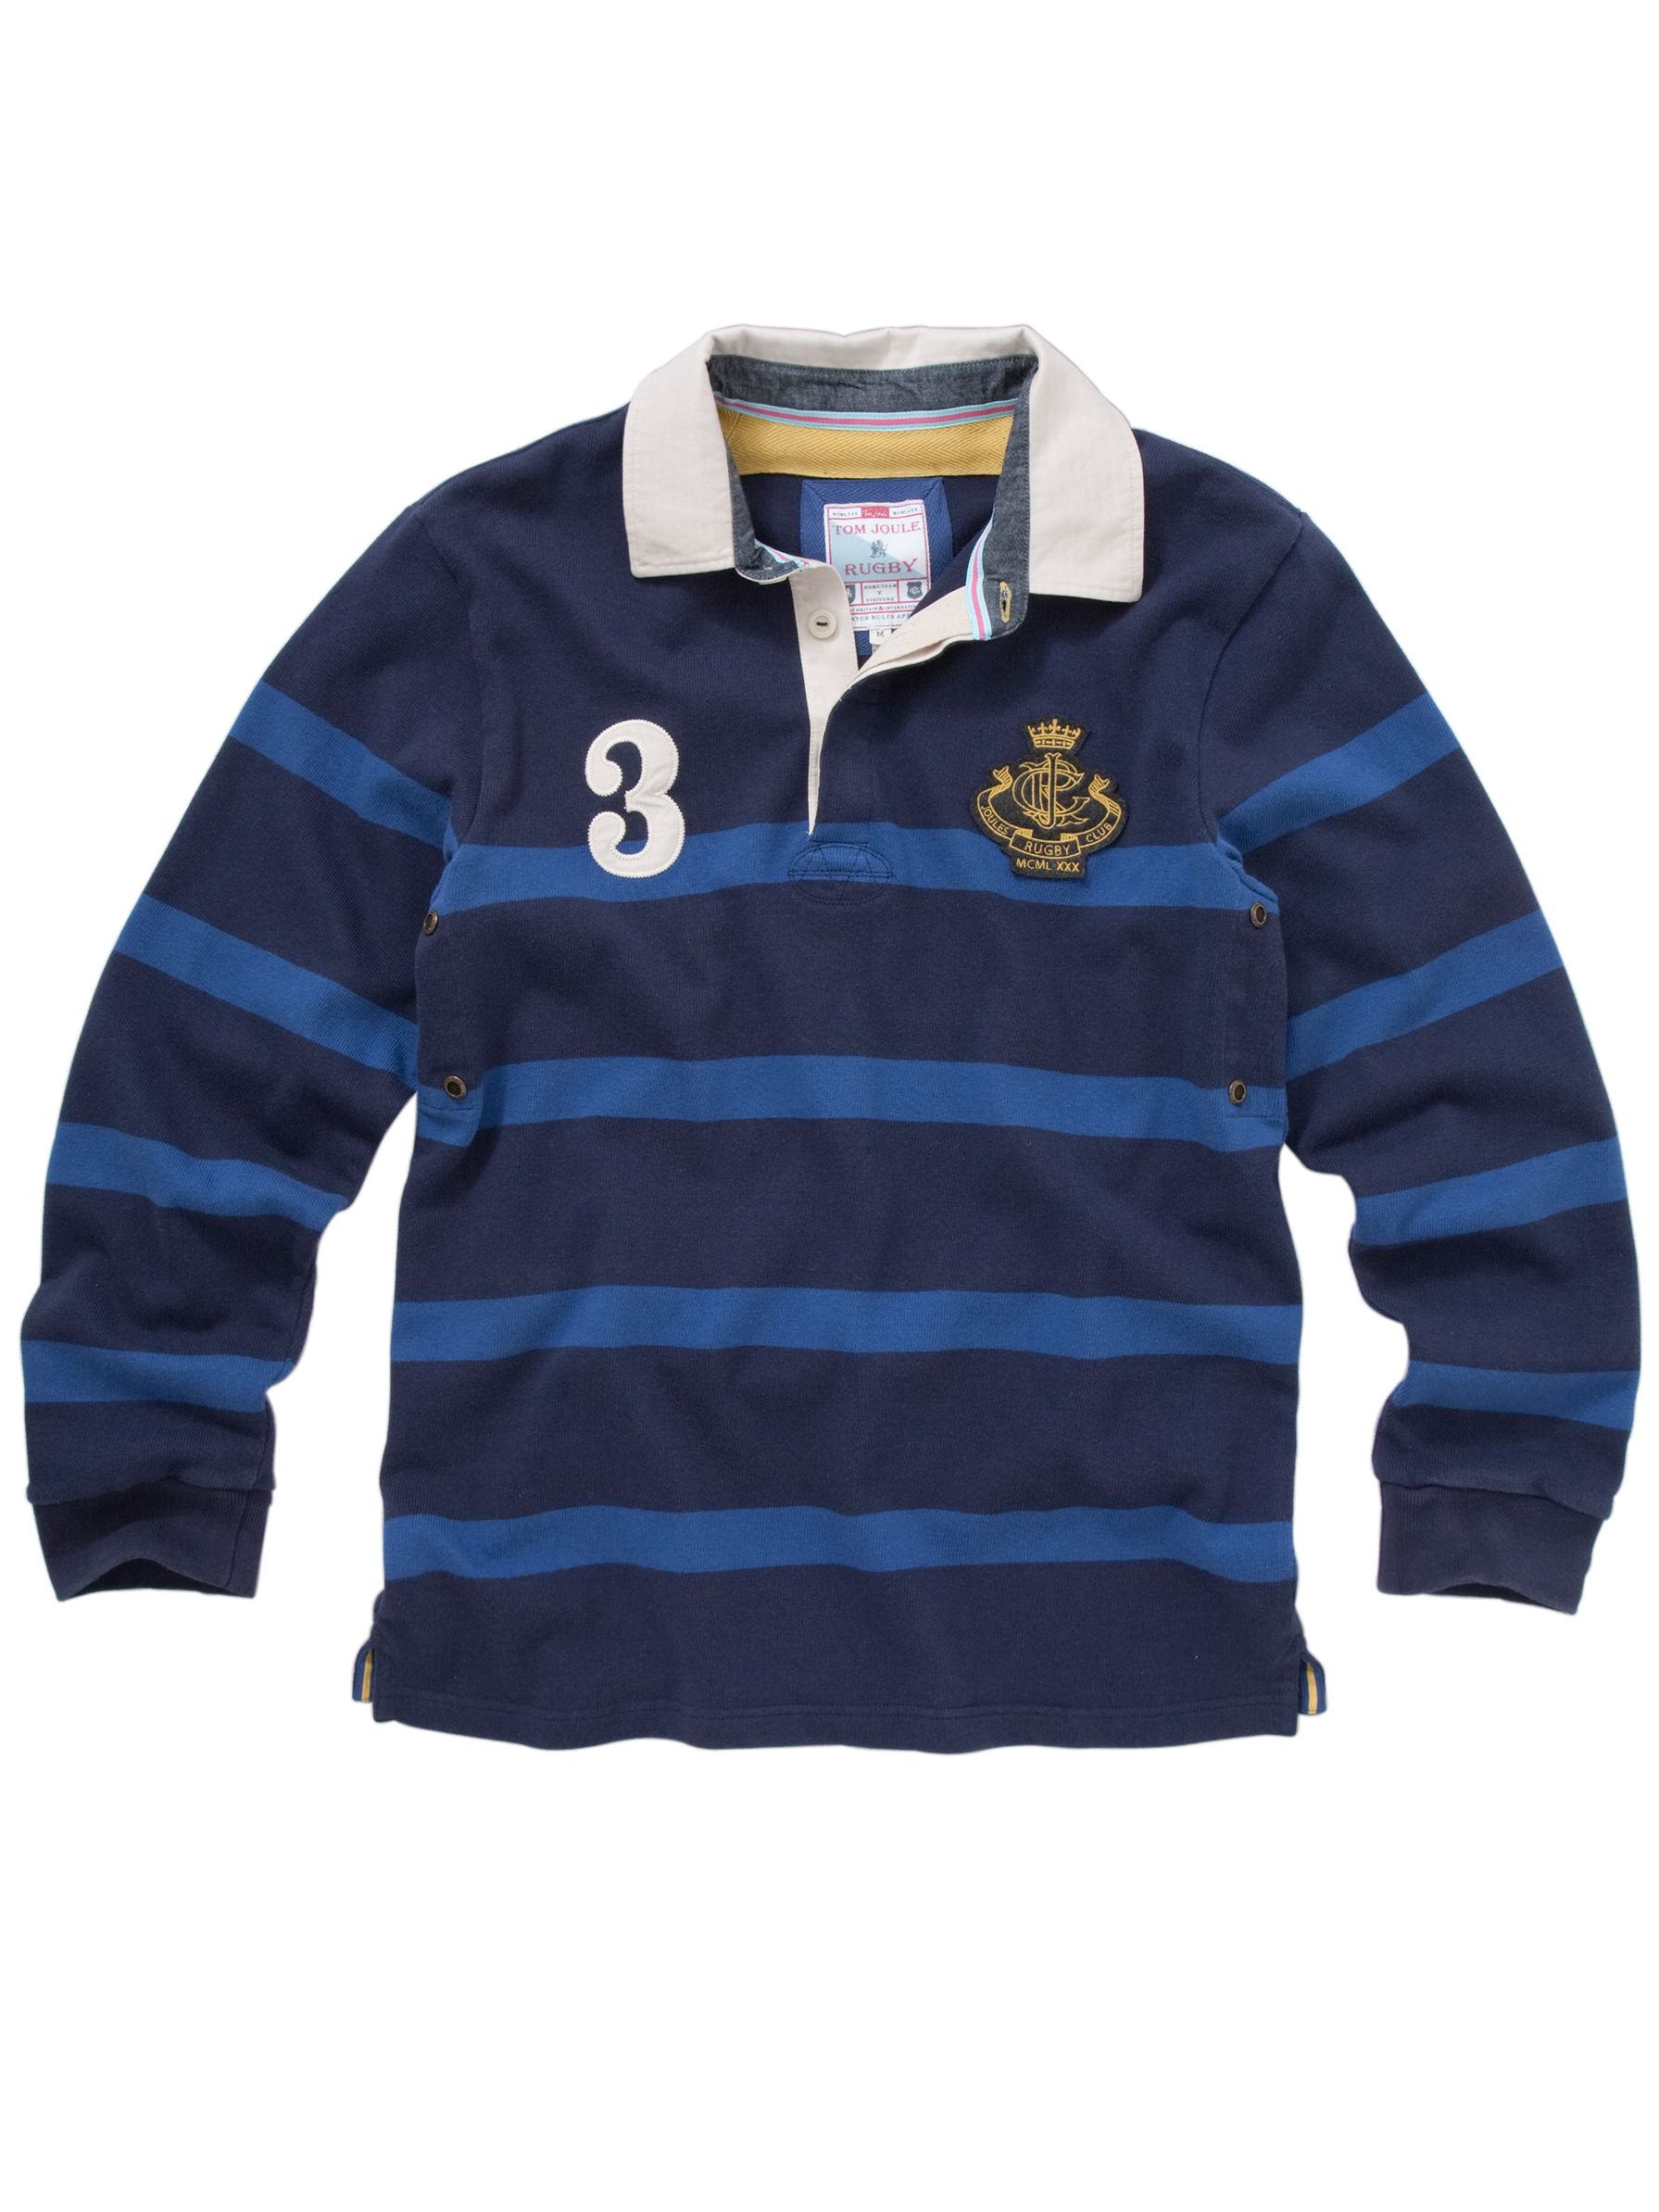 Stamford Stripe Rugby Shirt, Aux Blue